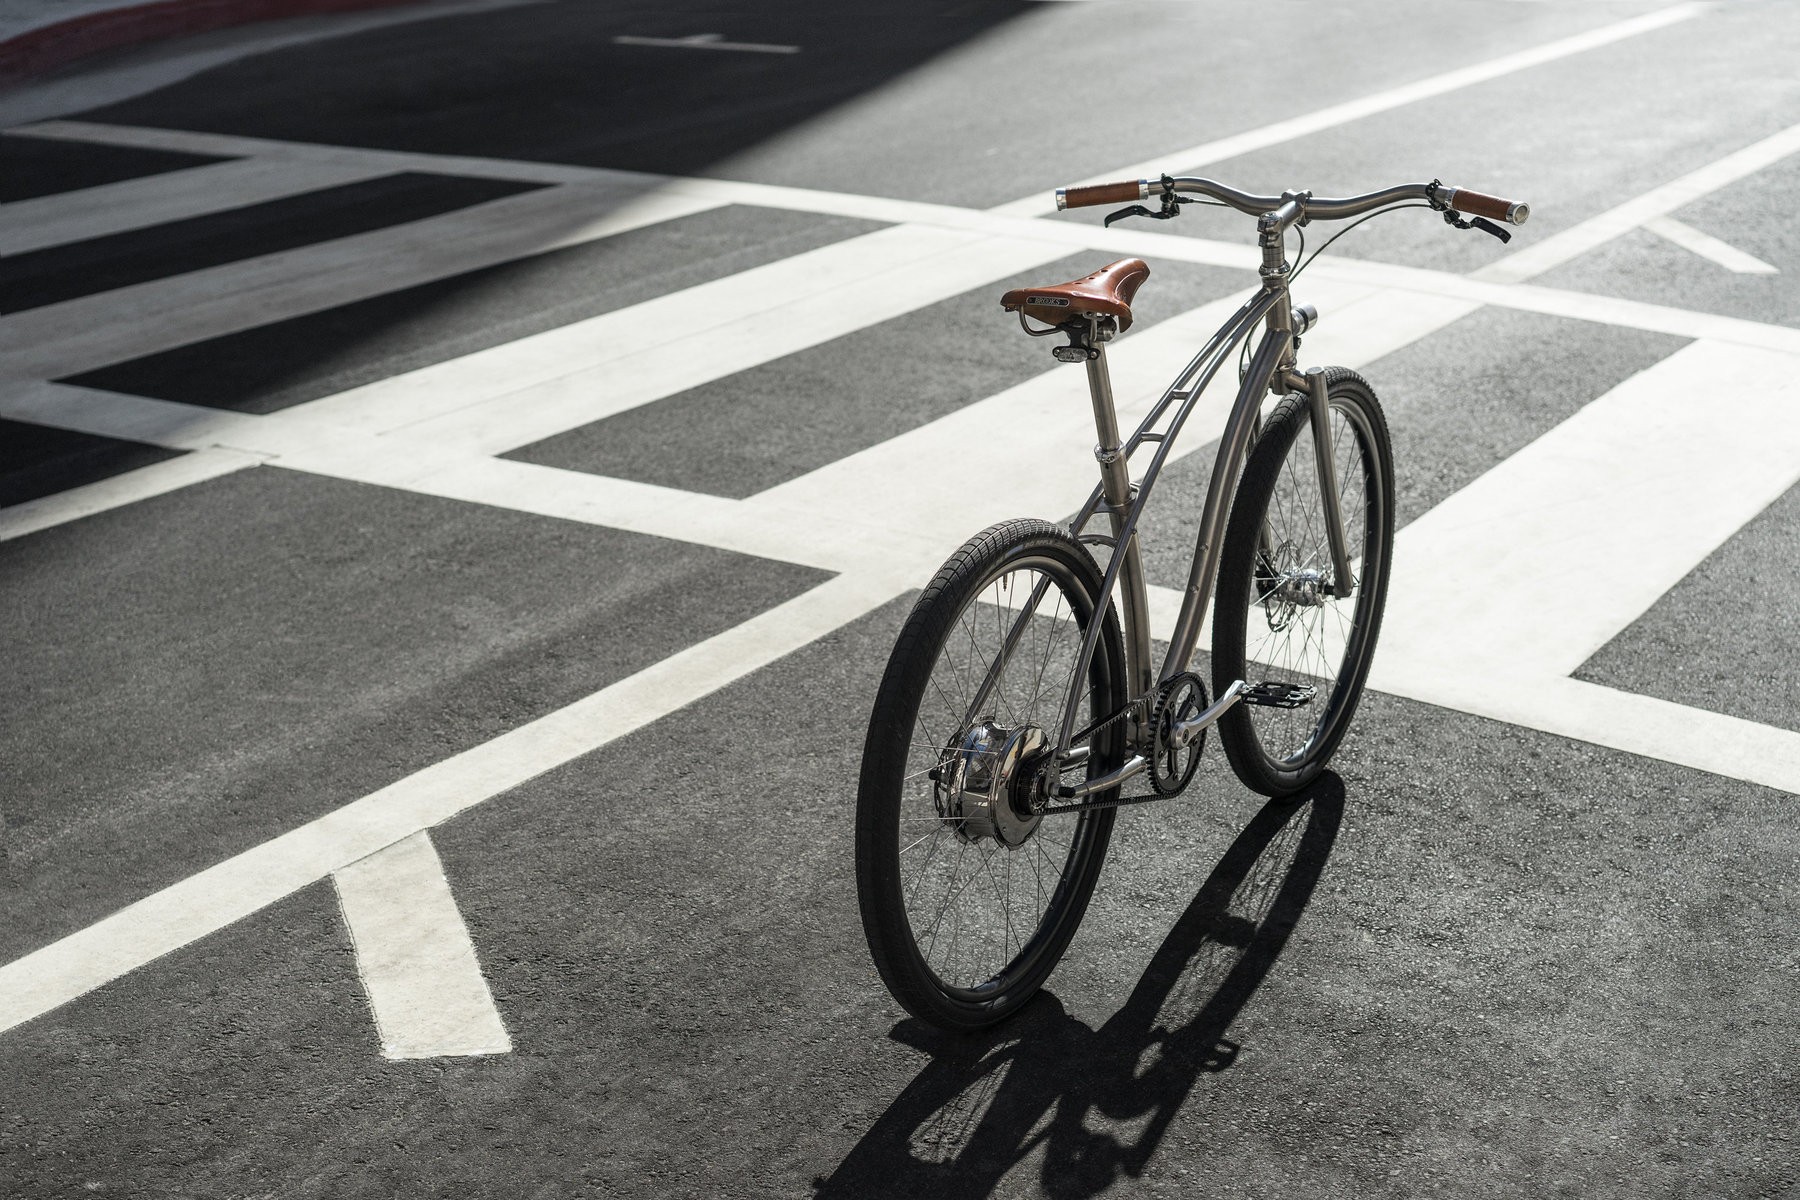 nwm-budnitz-bicycle-vae-ebike-titanium-brooks-urban-urbain-city-titane-velo